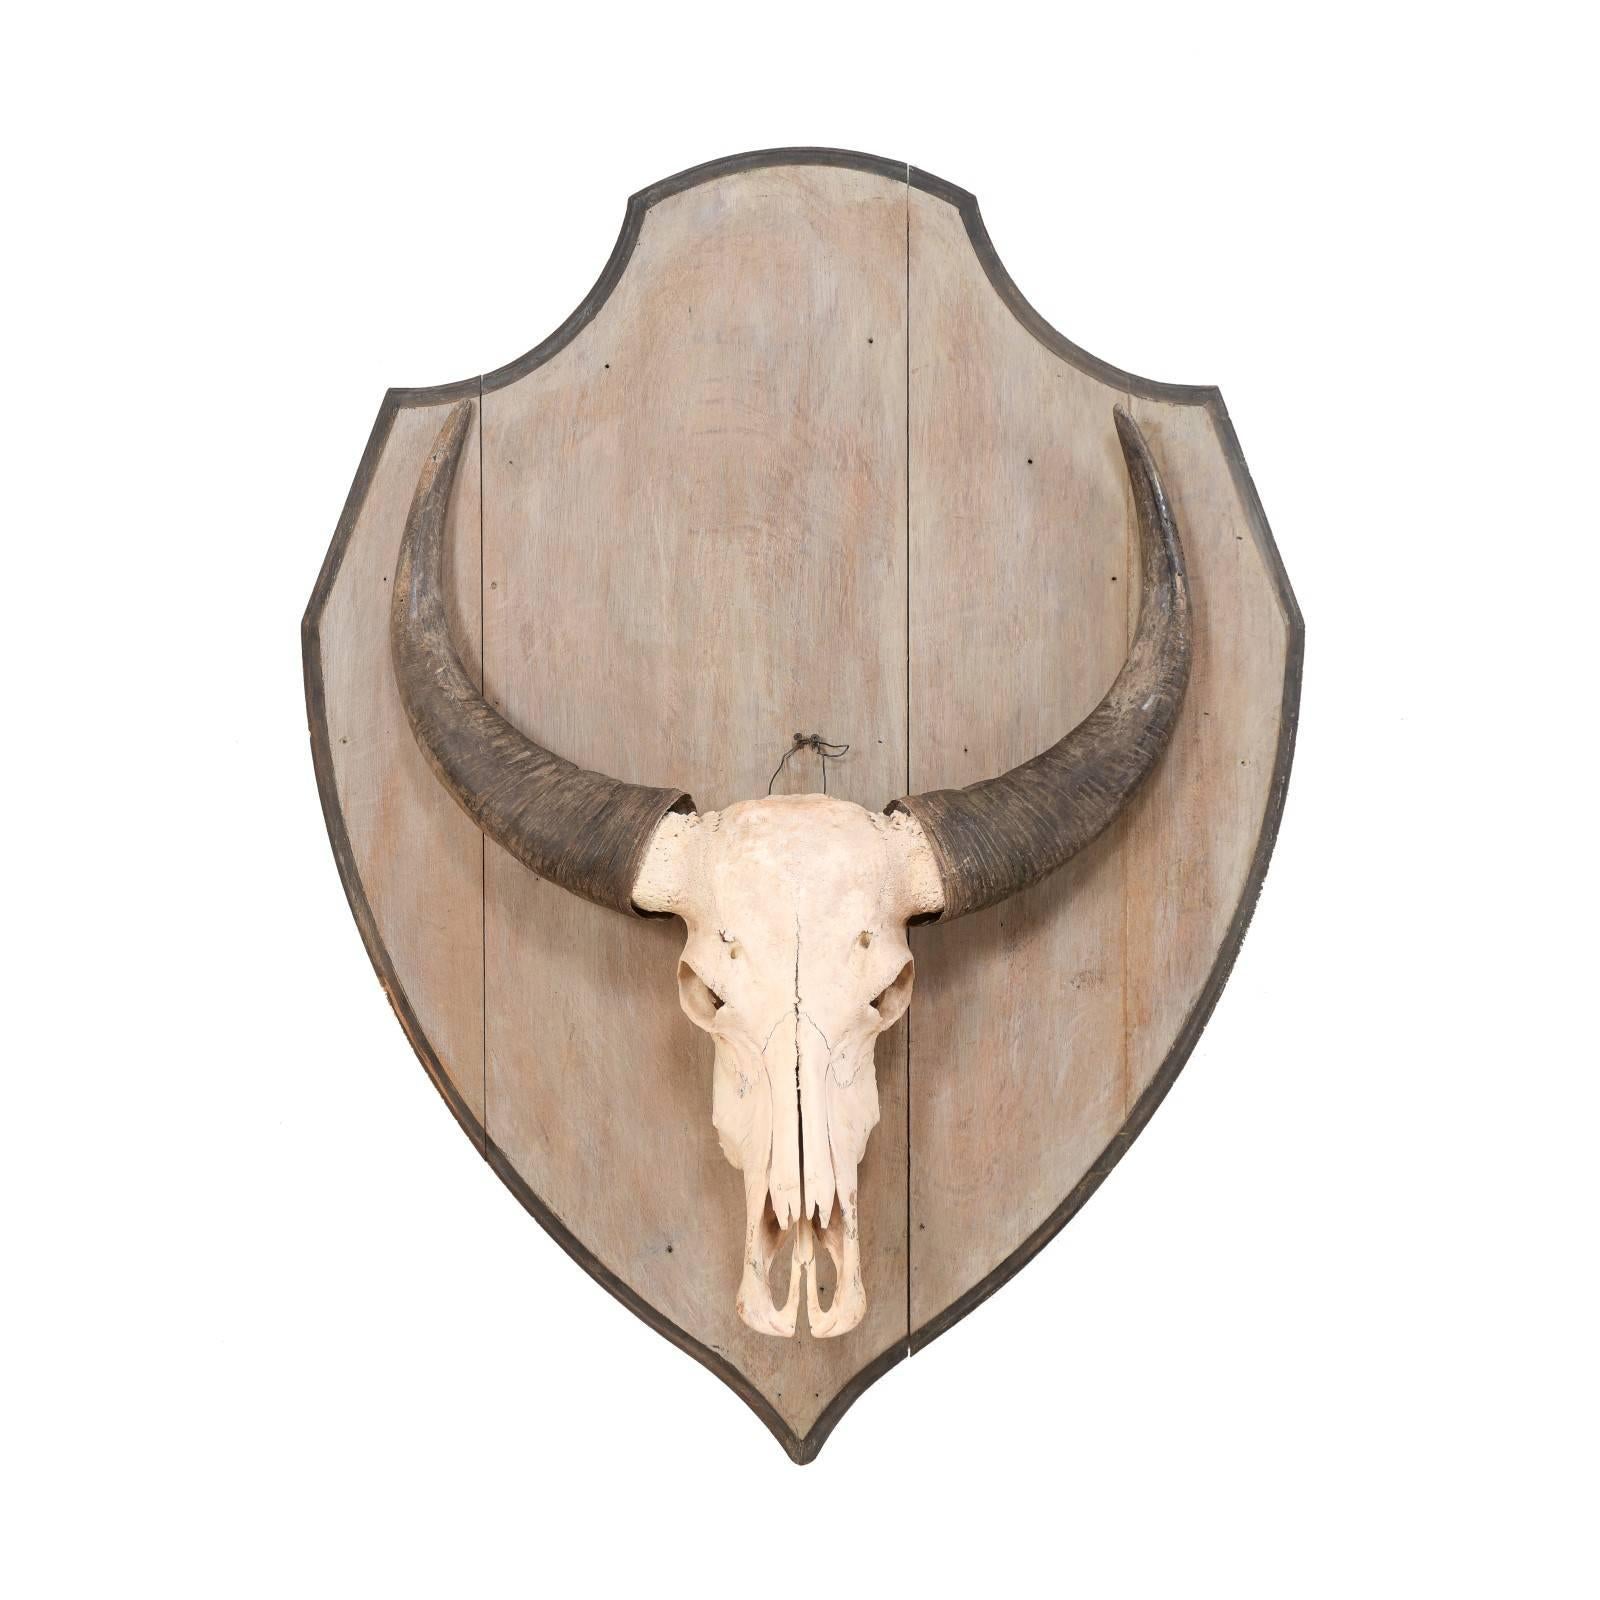 European Vintage Water Buffalo Skull Mounted on Shield-Shaped Wood Plaque